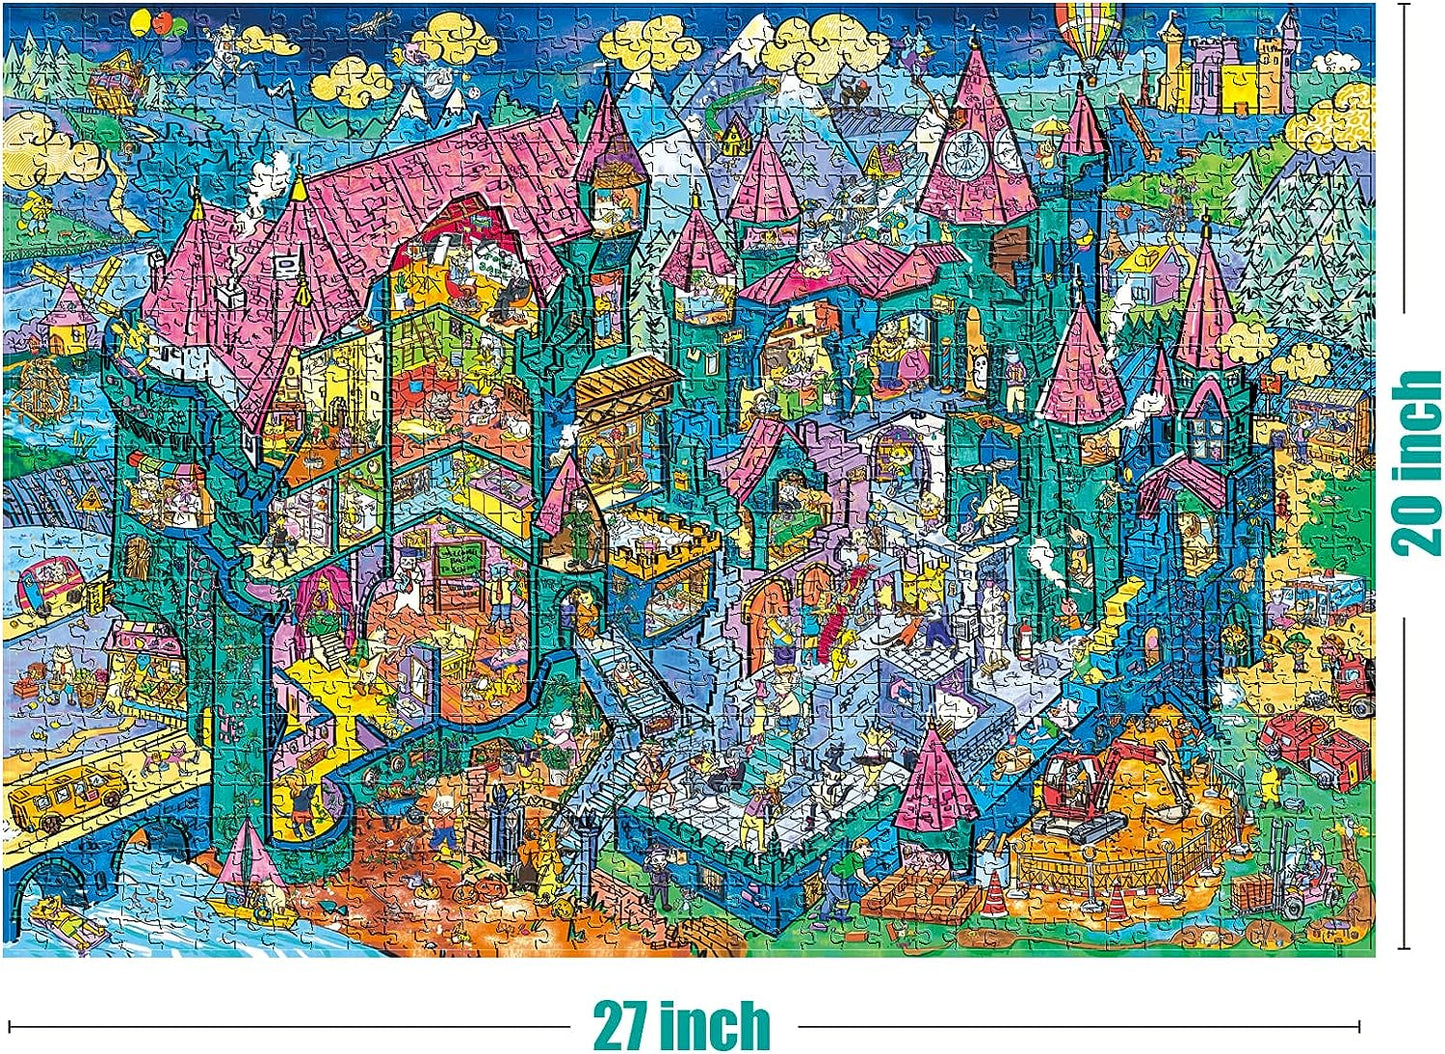 2 in 1 1000 Piece Puzzle Bundle - Cat Castle and Roaster Coaster